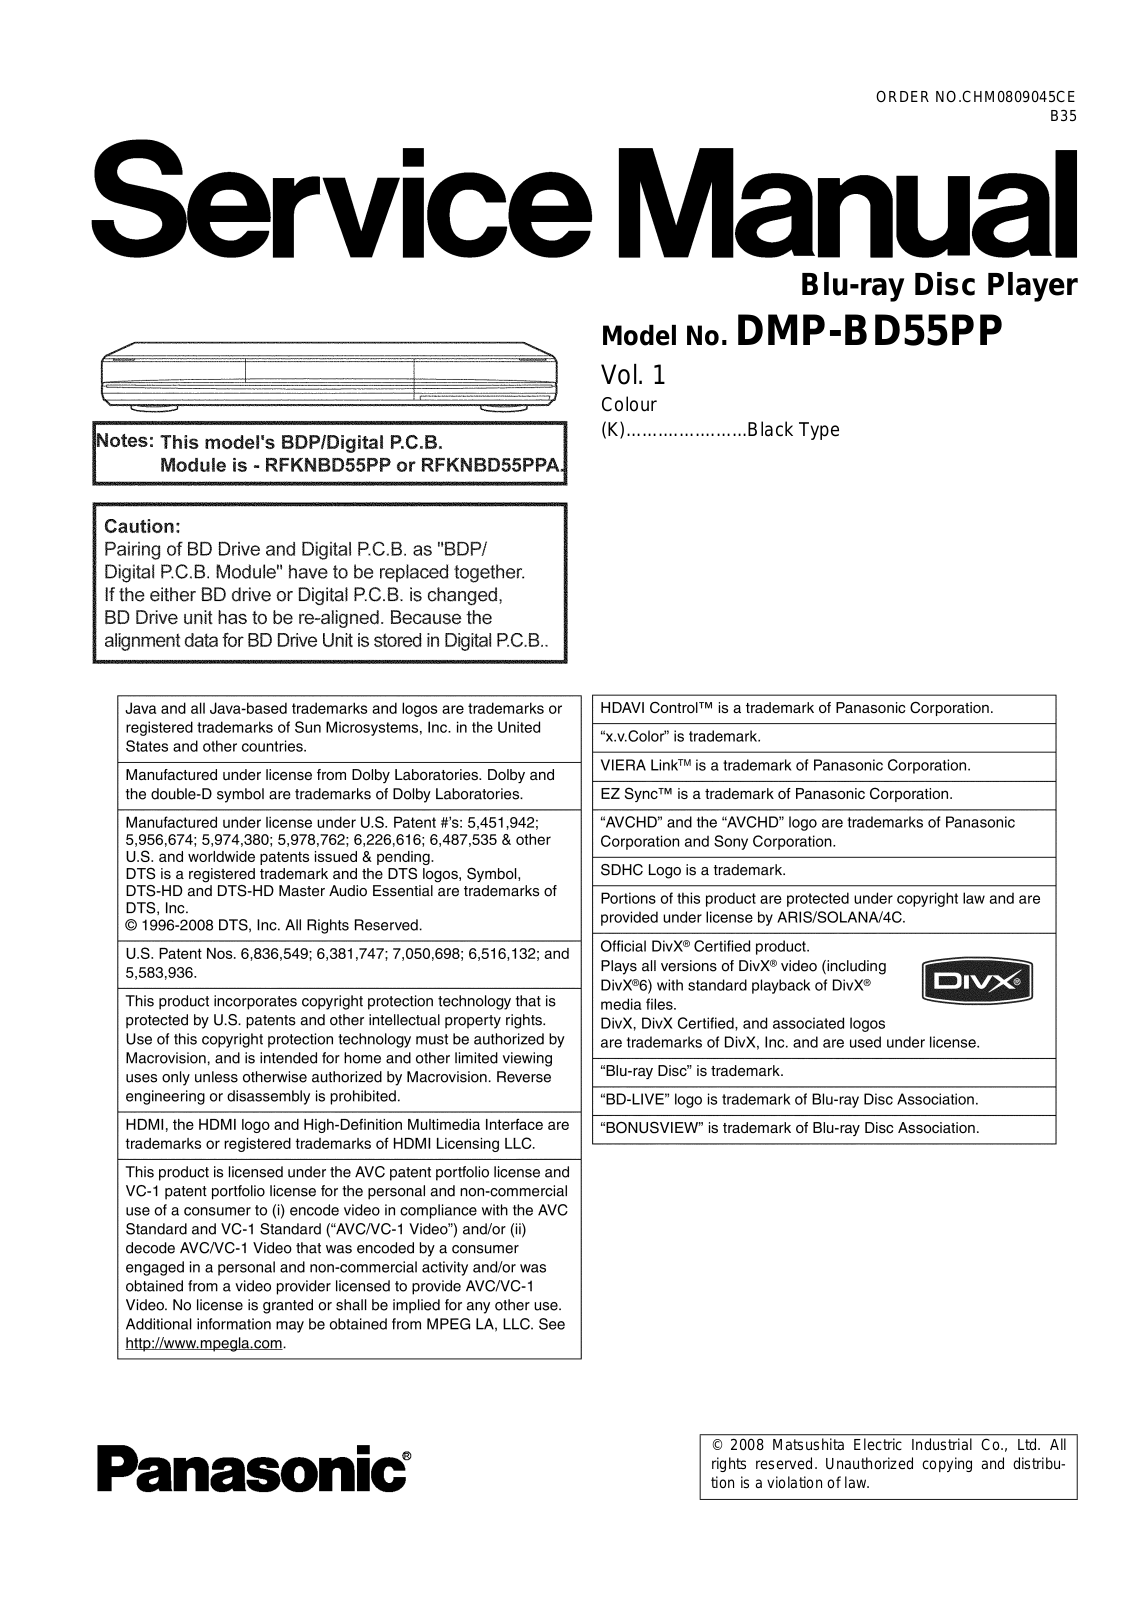 Panasonic DMPBD-55-PP Service manual